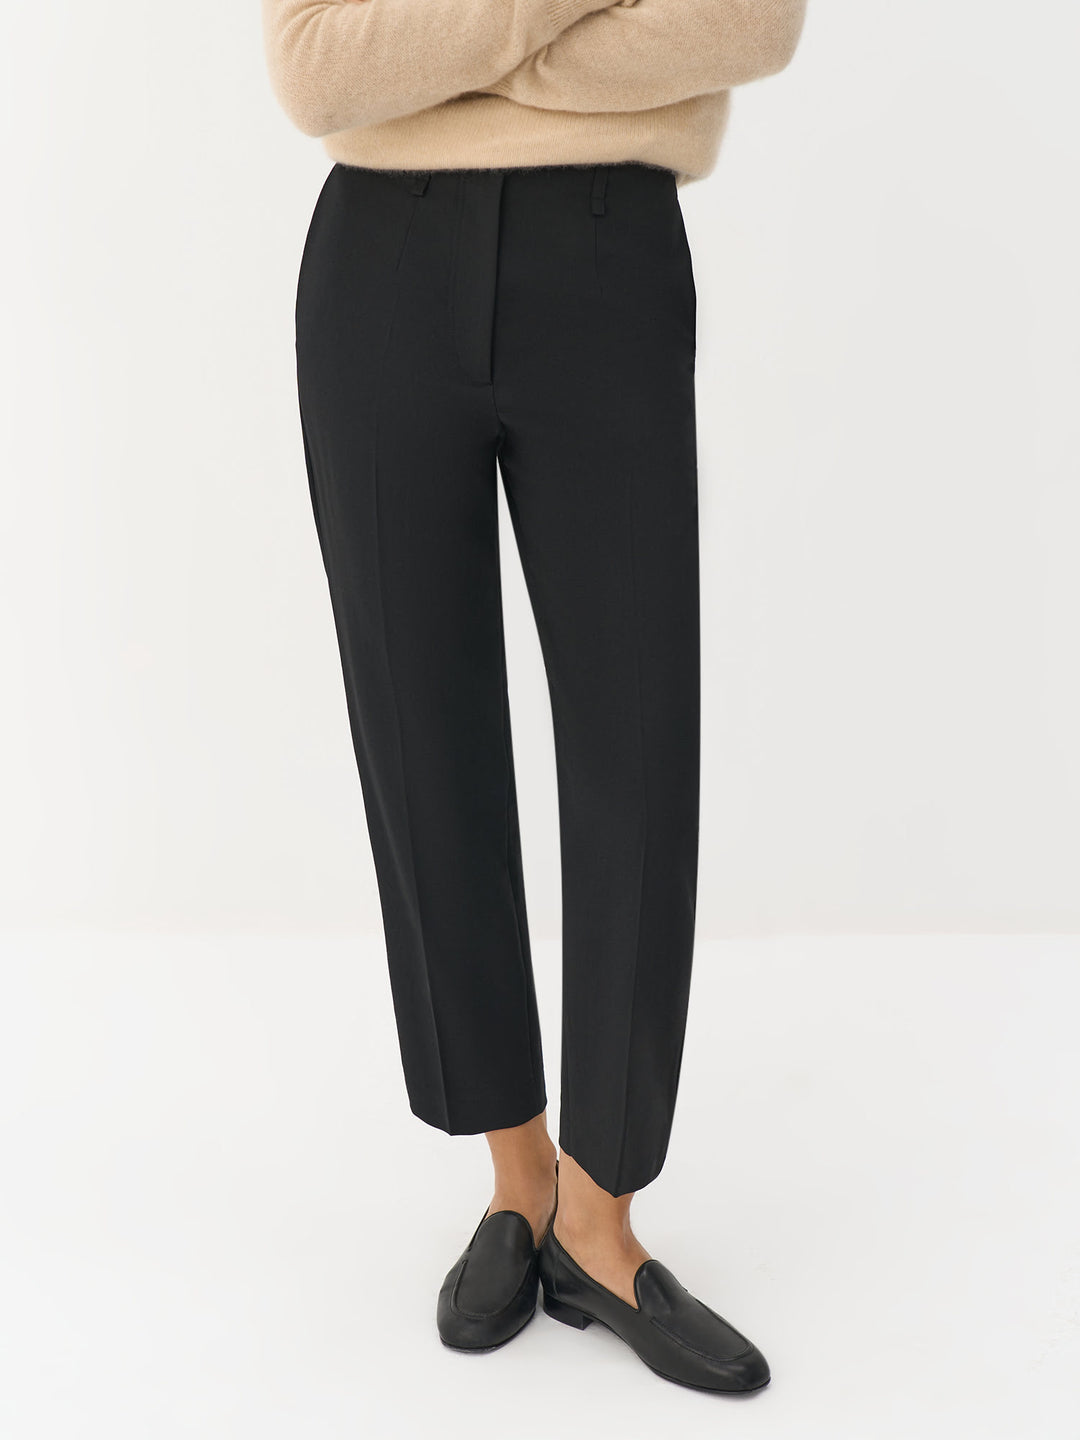 wool pants - women - high waist - cropped - black